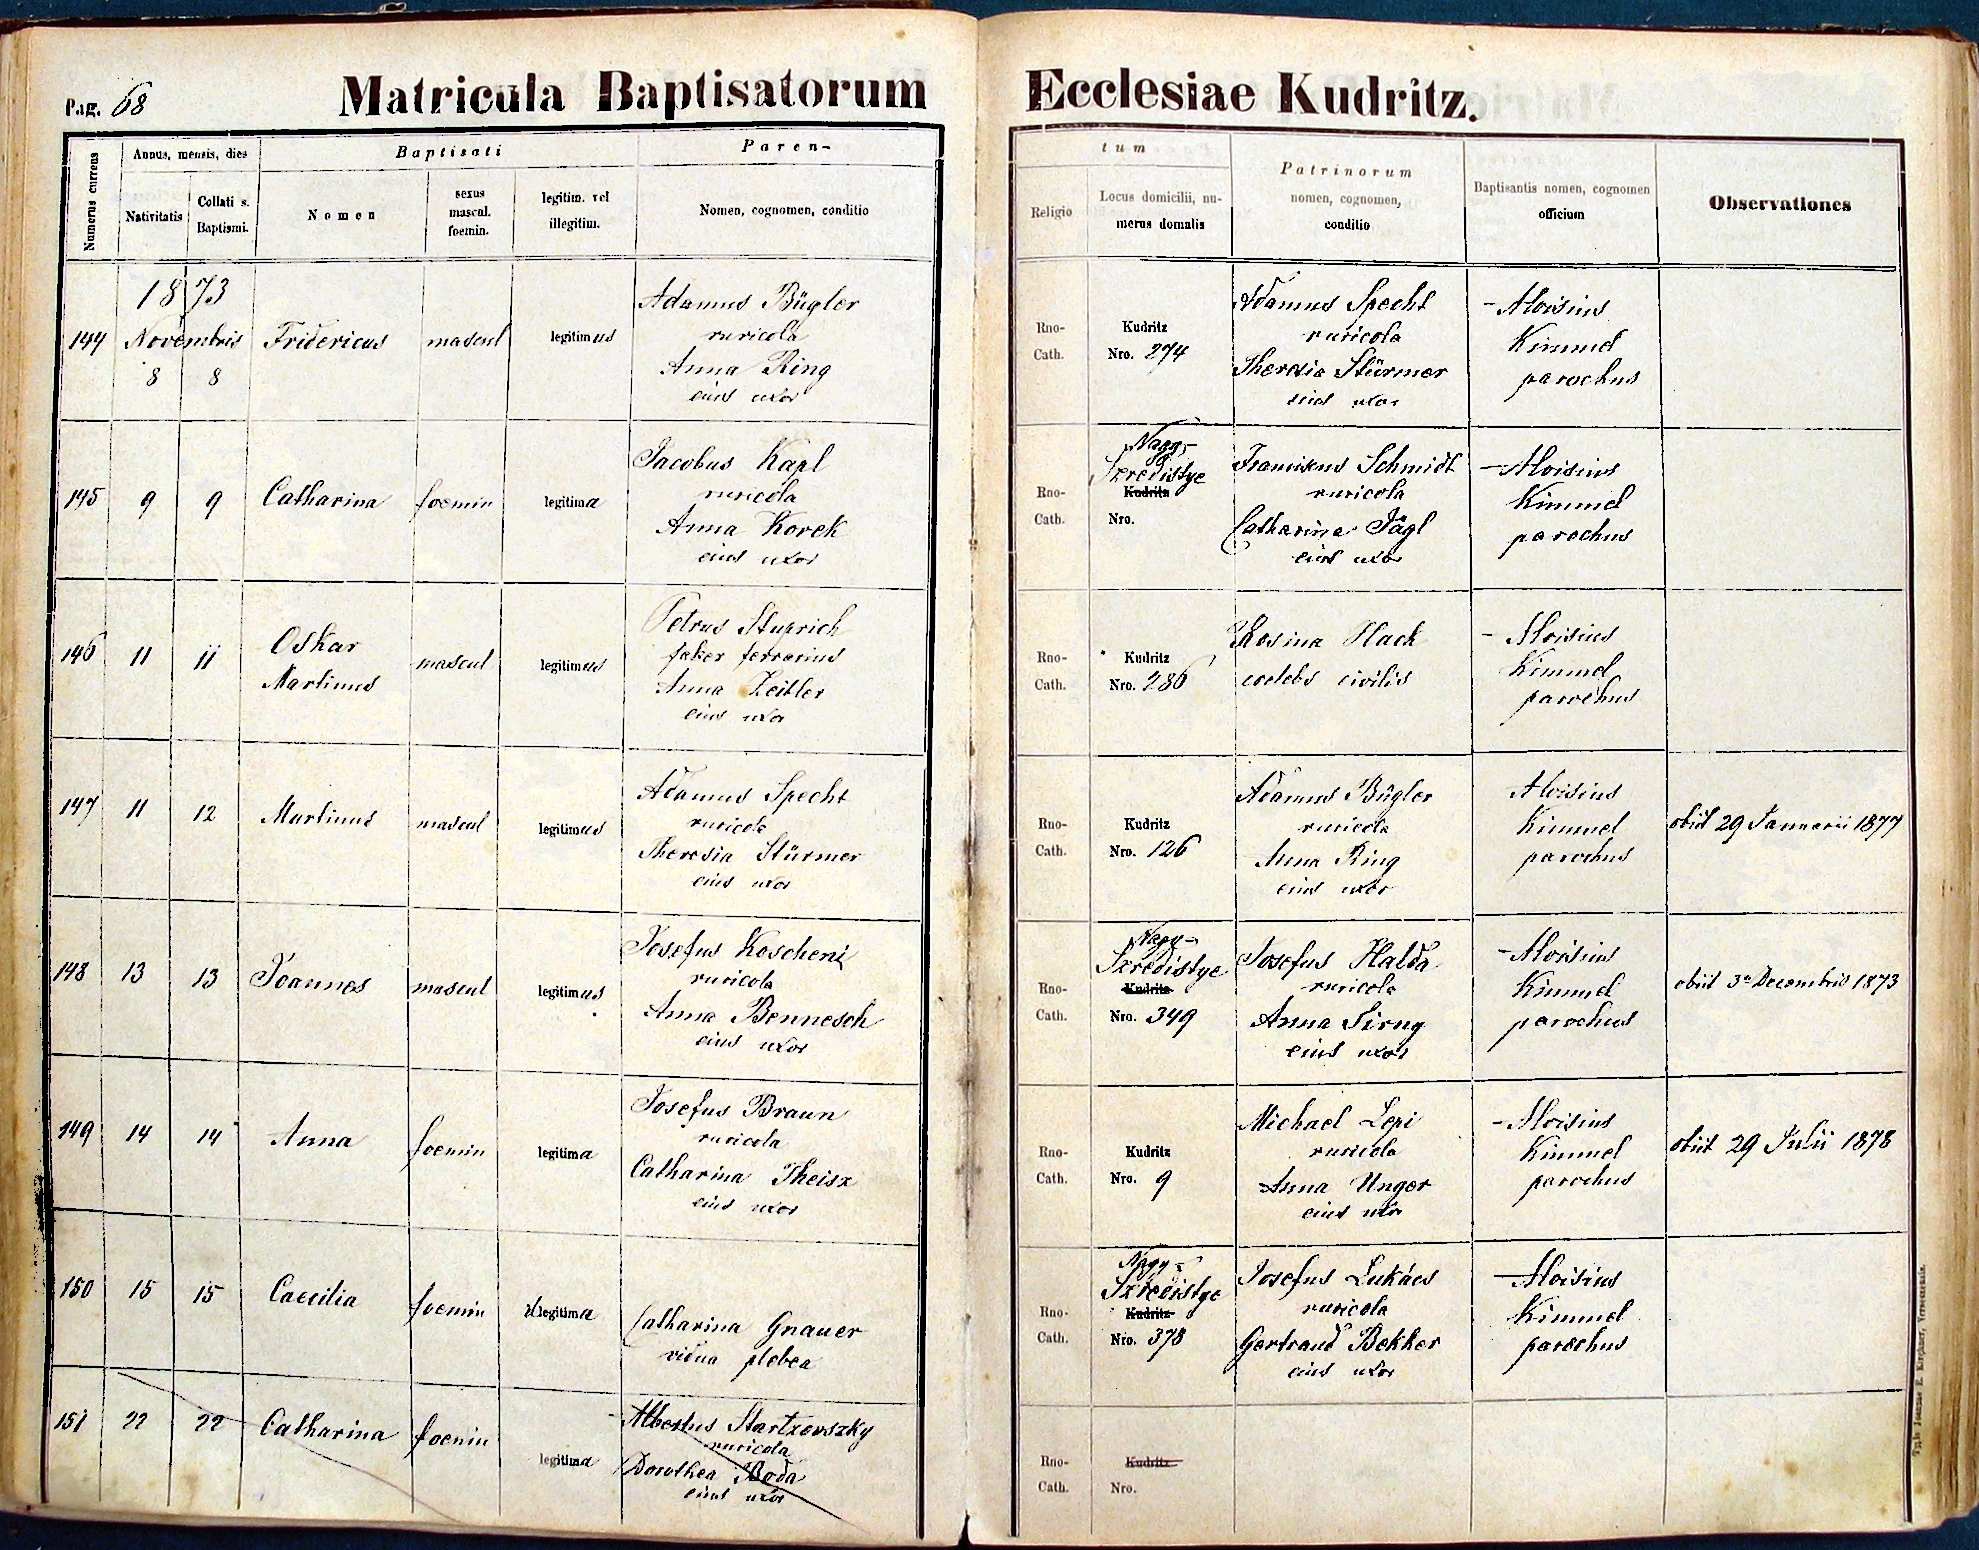 images/church_records/BIRTHS/1884-1899B/1888/068